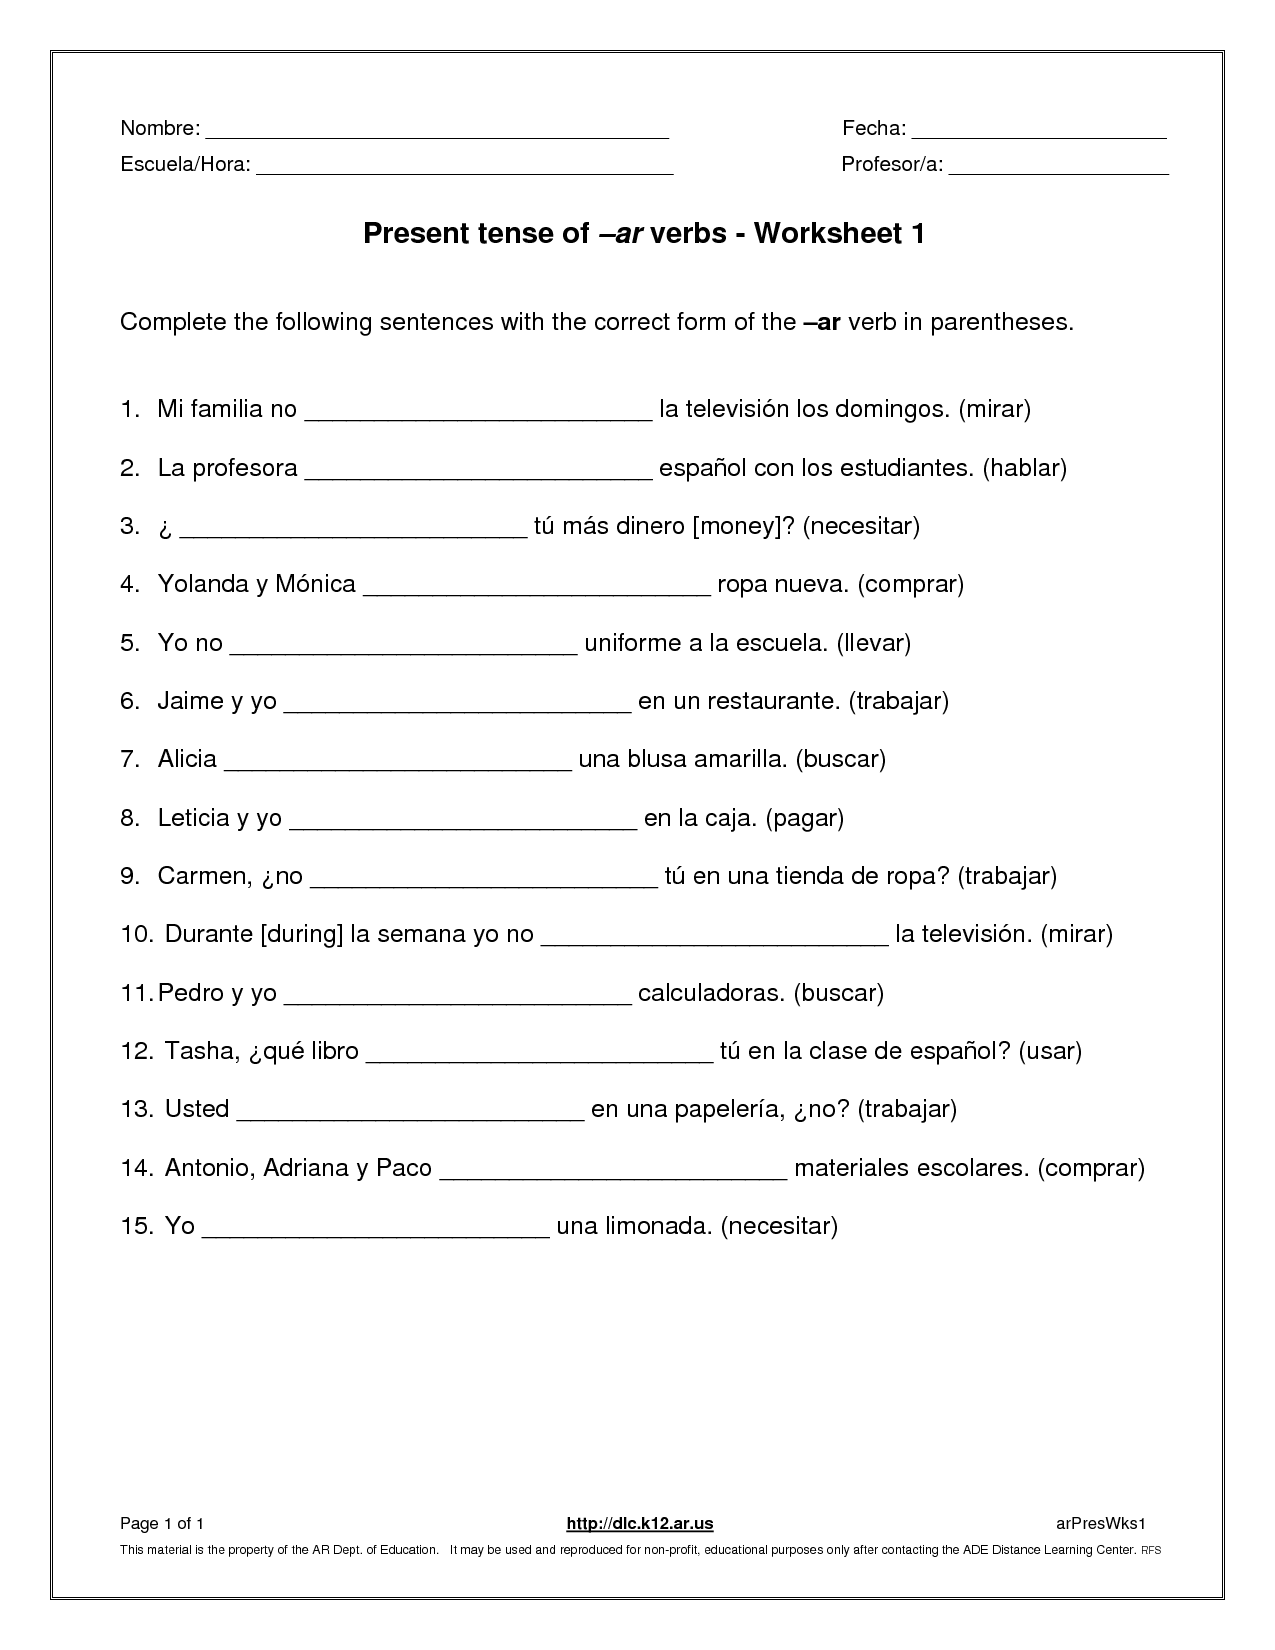 Present Tense Verbs Worksheets